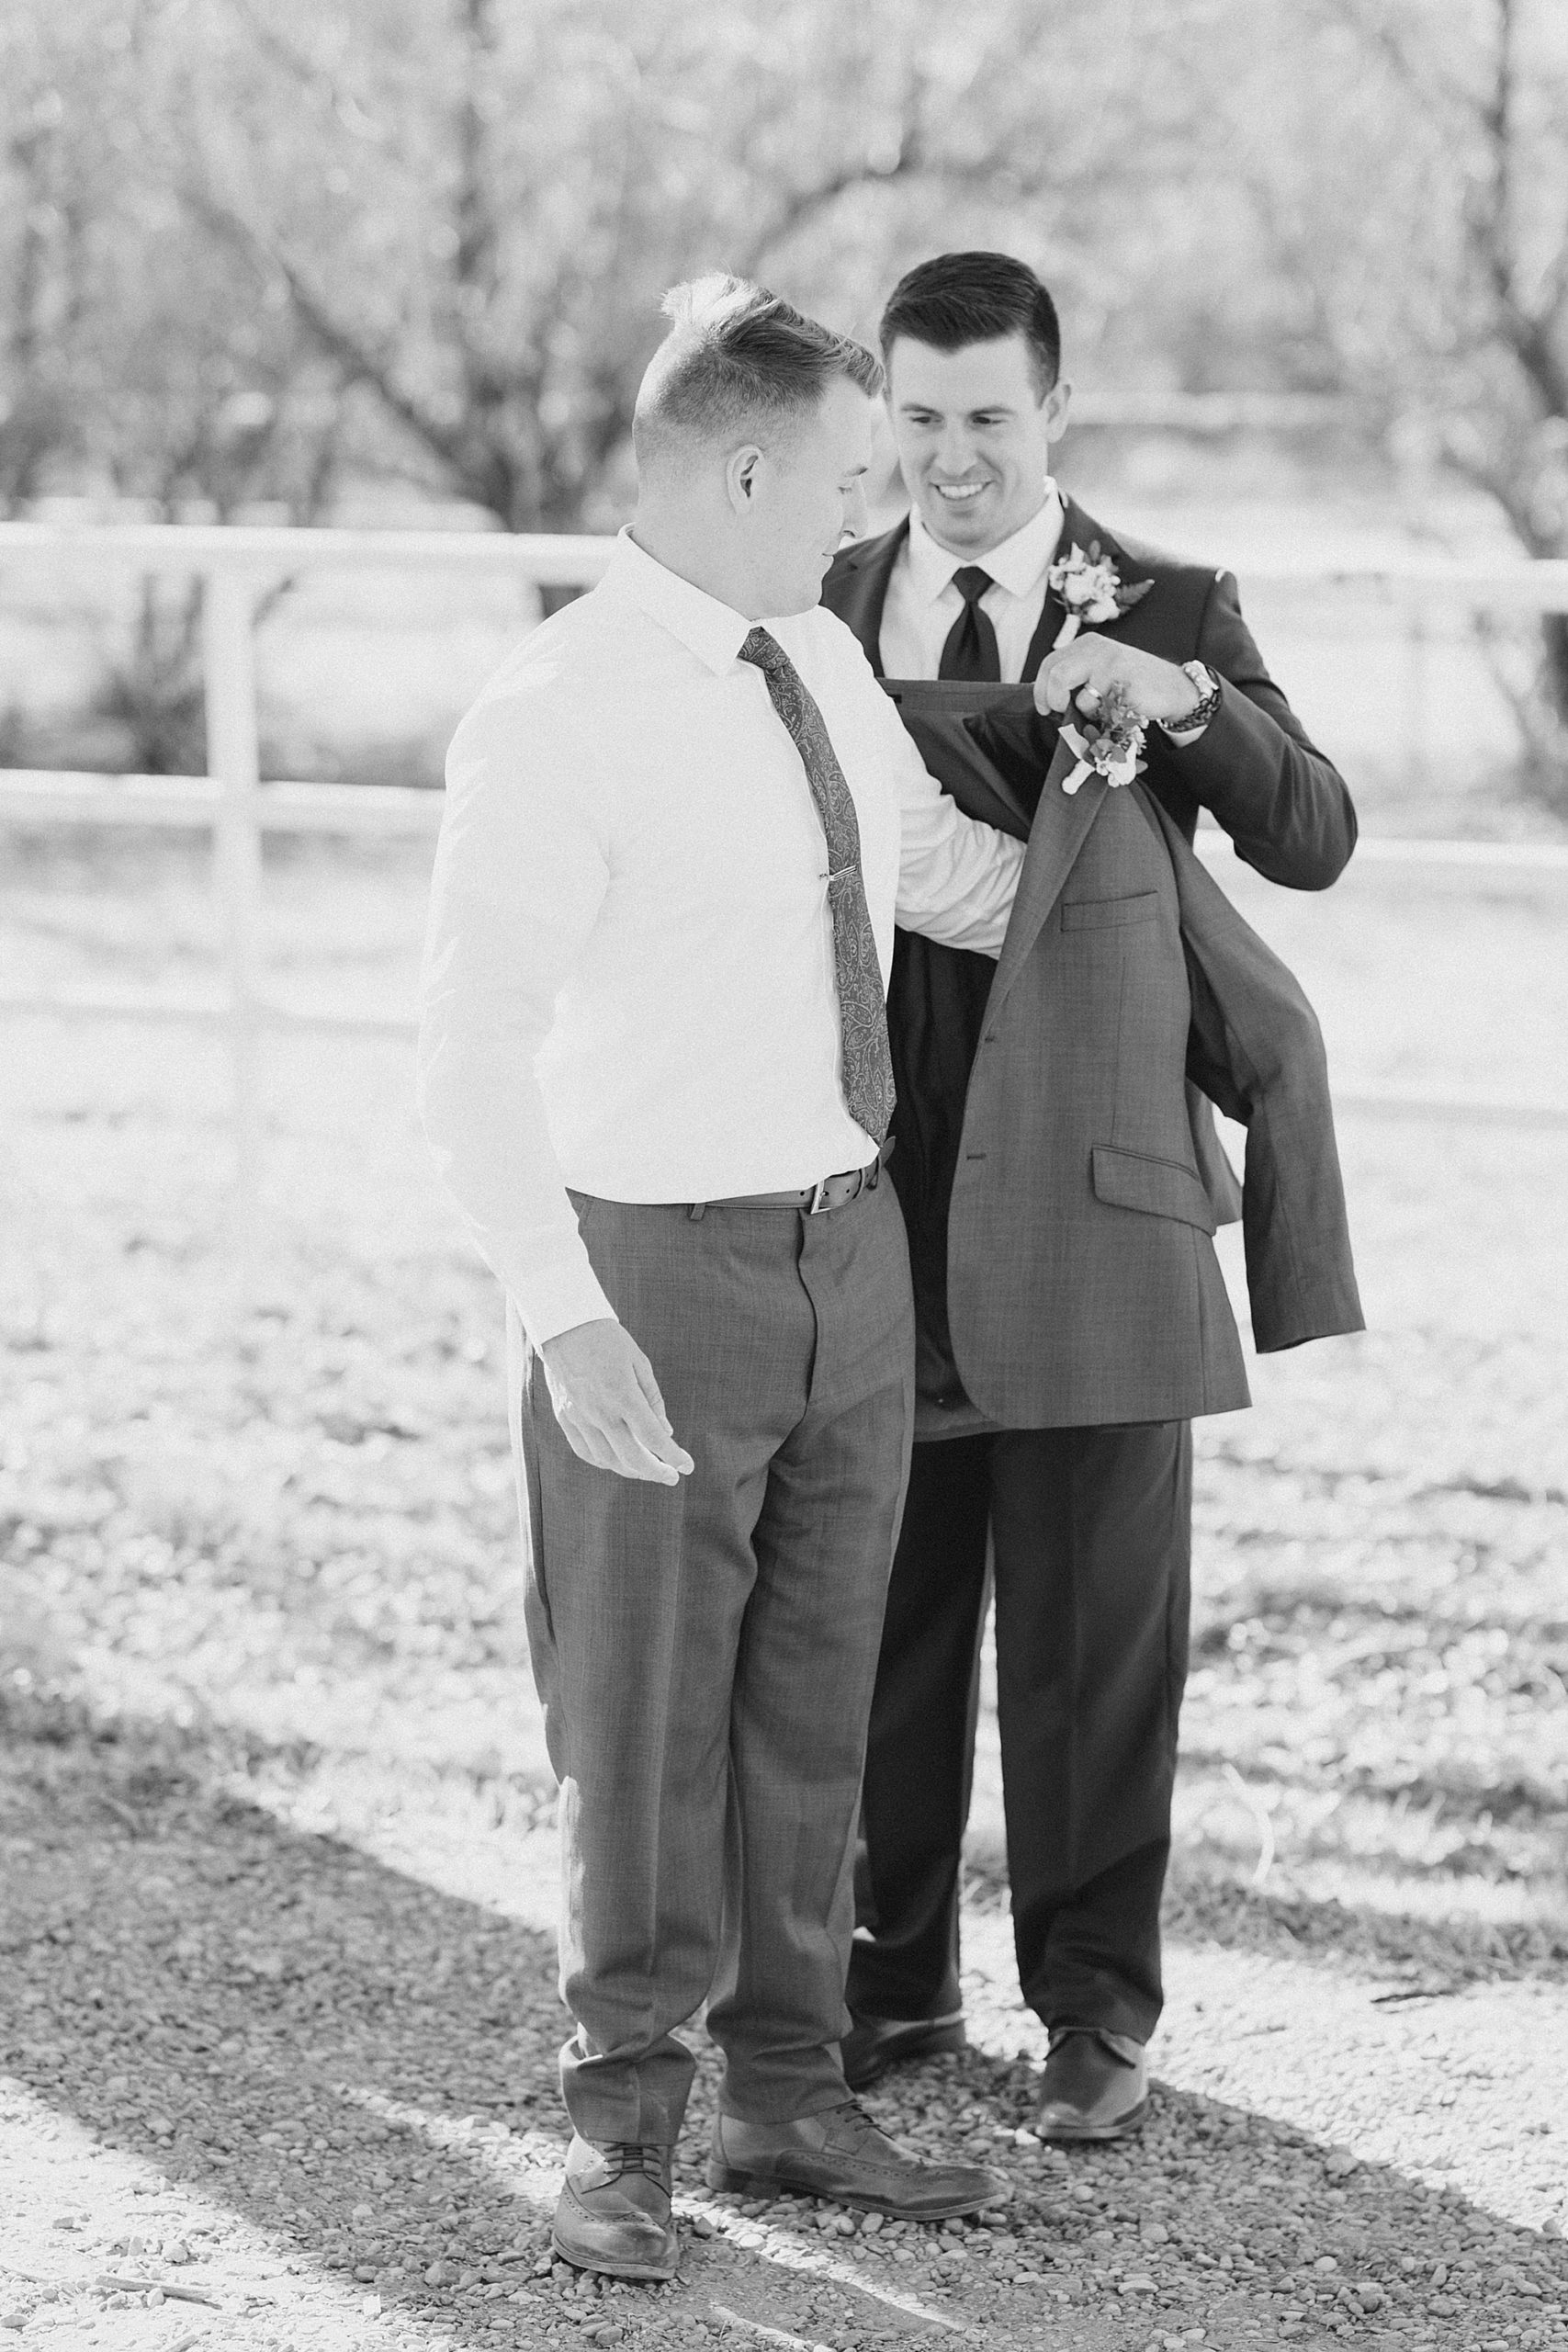 groomsman helps groom into jacket before winter wedding day